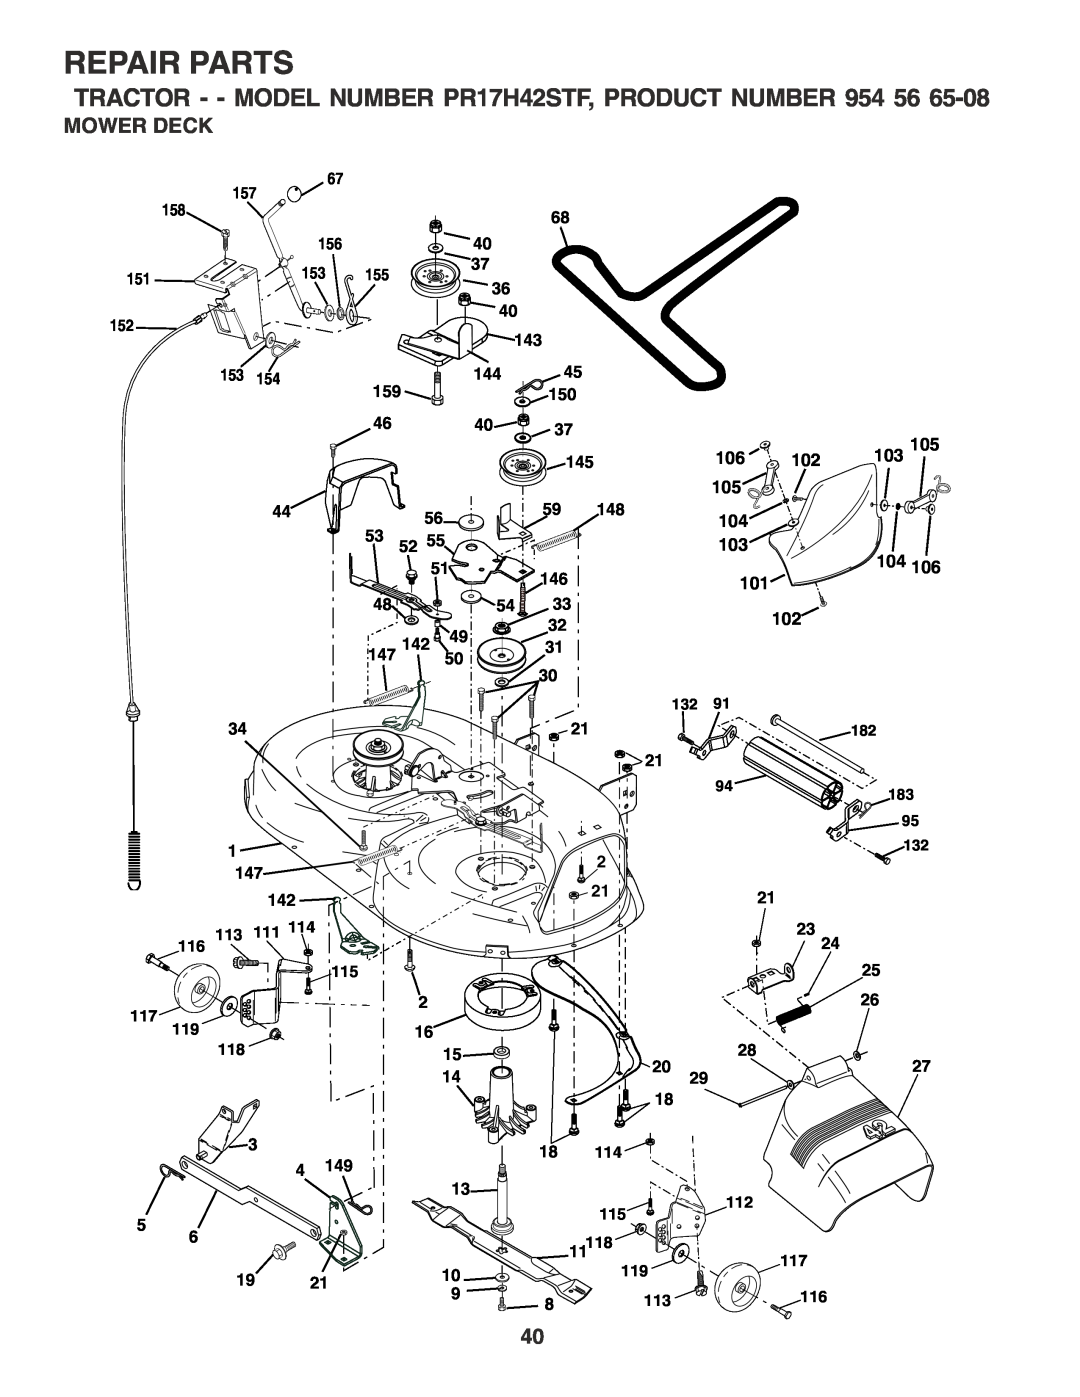 Poulan 183041 owner manual Mower Deck, Repair Parts, TRACTOR - - MODEL NUMBER PR17H42STF, PRODUCT NUMBER 954 56, 103 104 